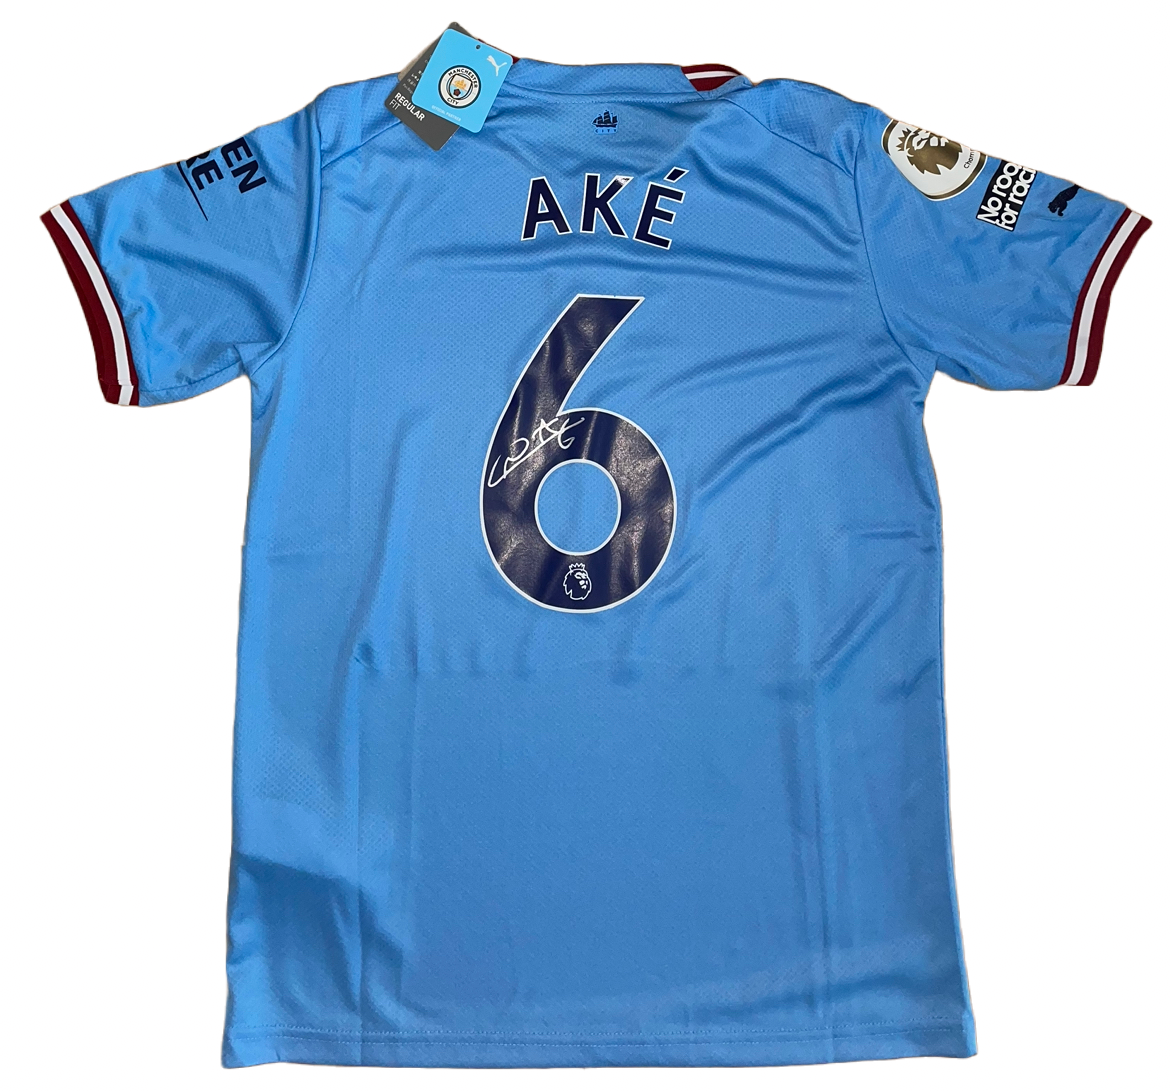 Signed Nathan Aké Manchester City Home Shirt 22/23